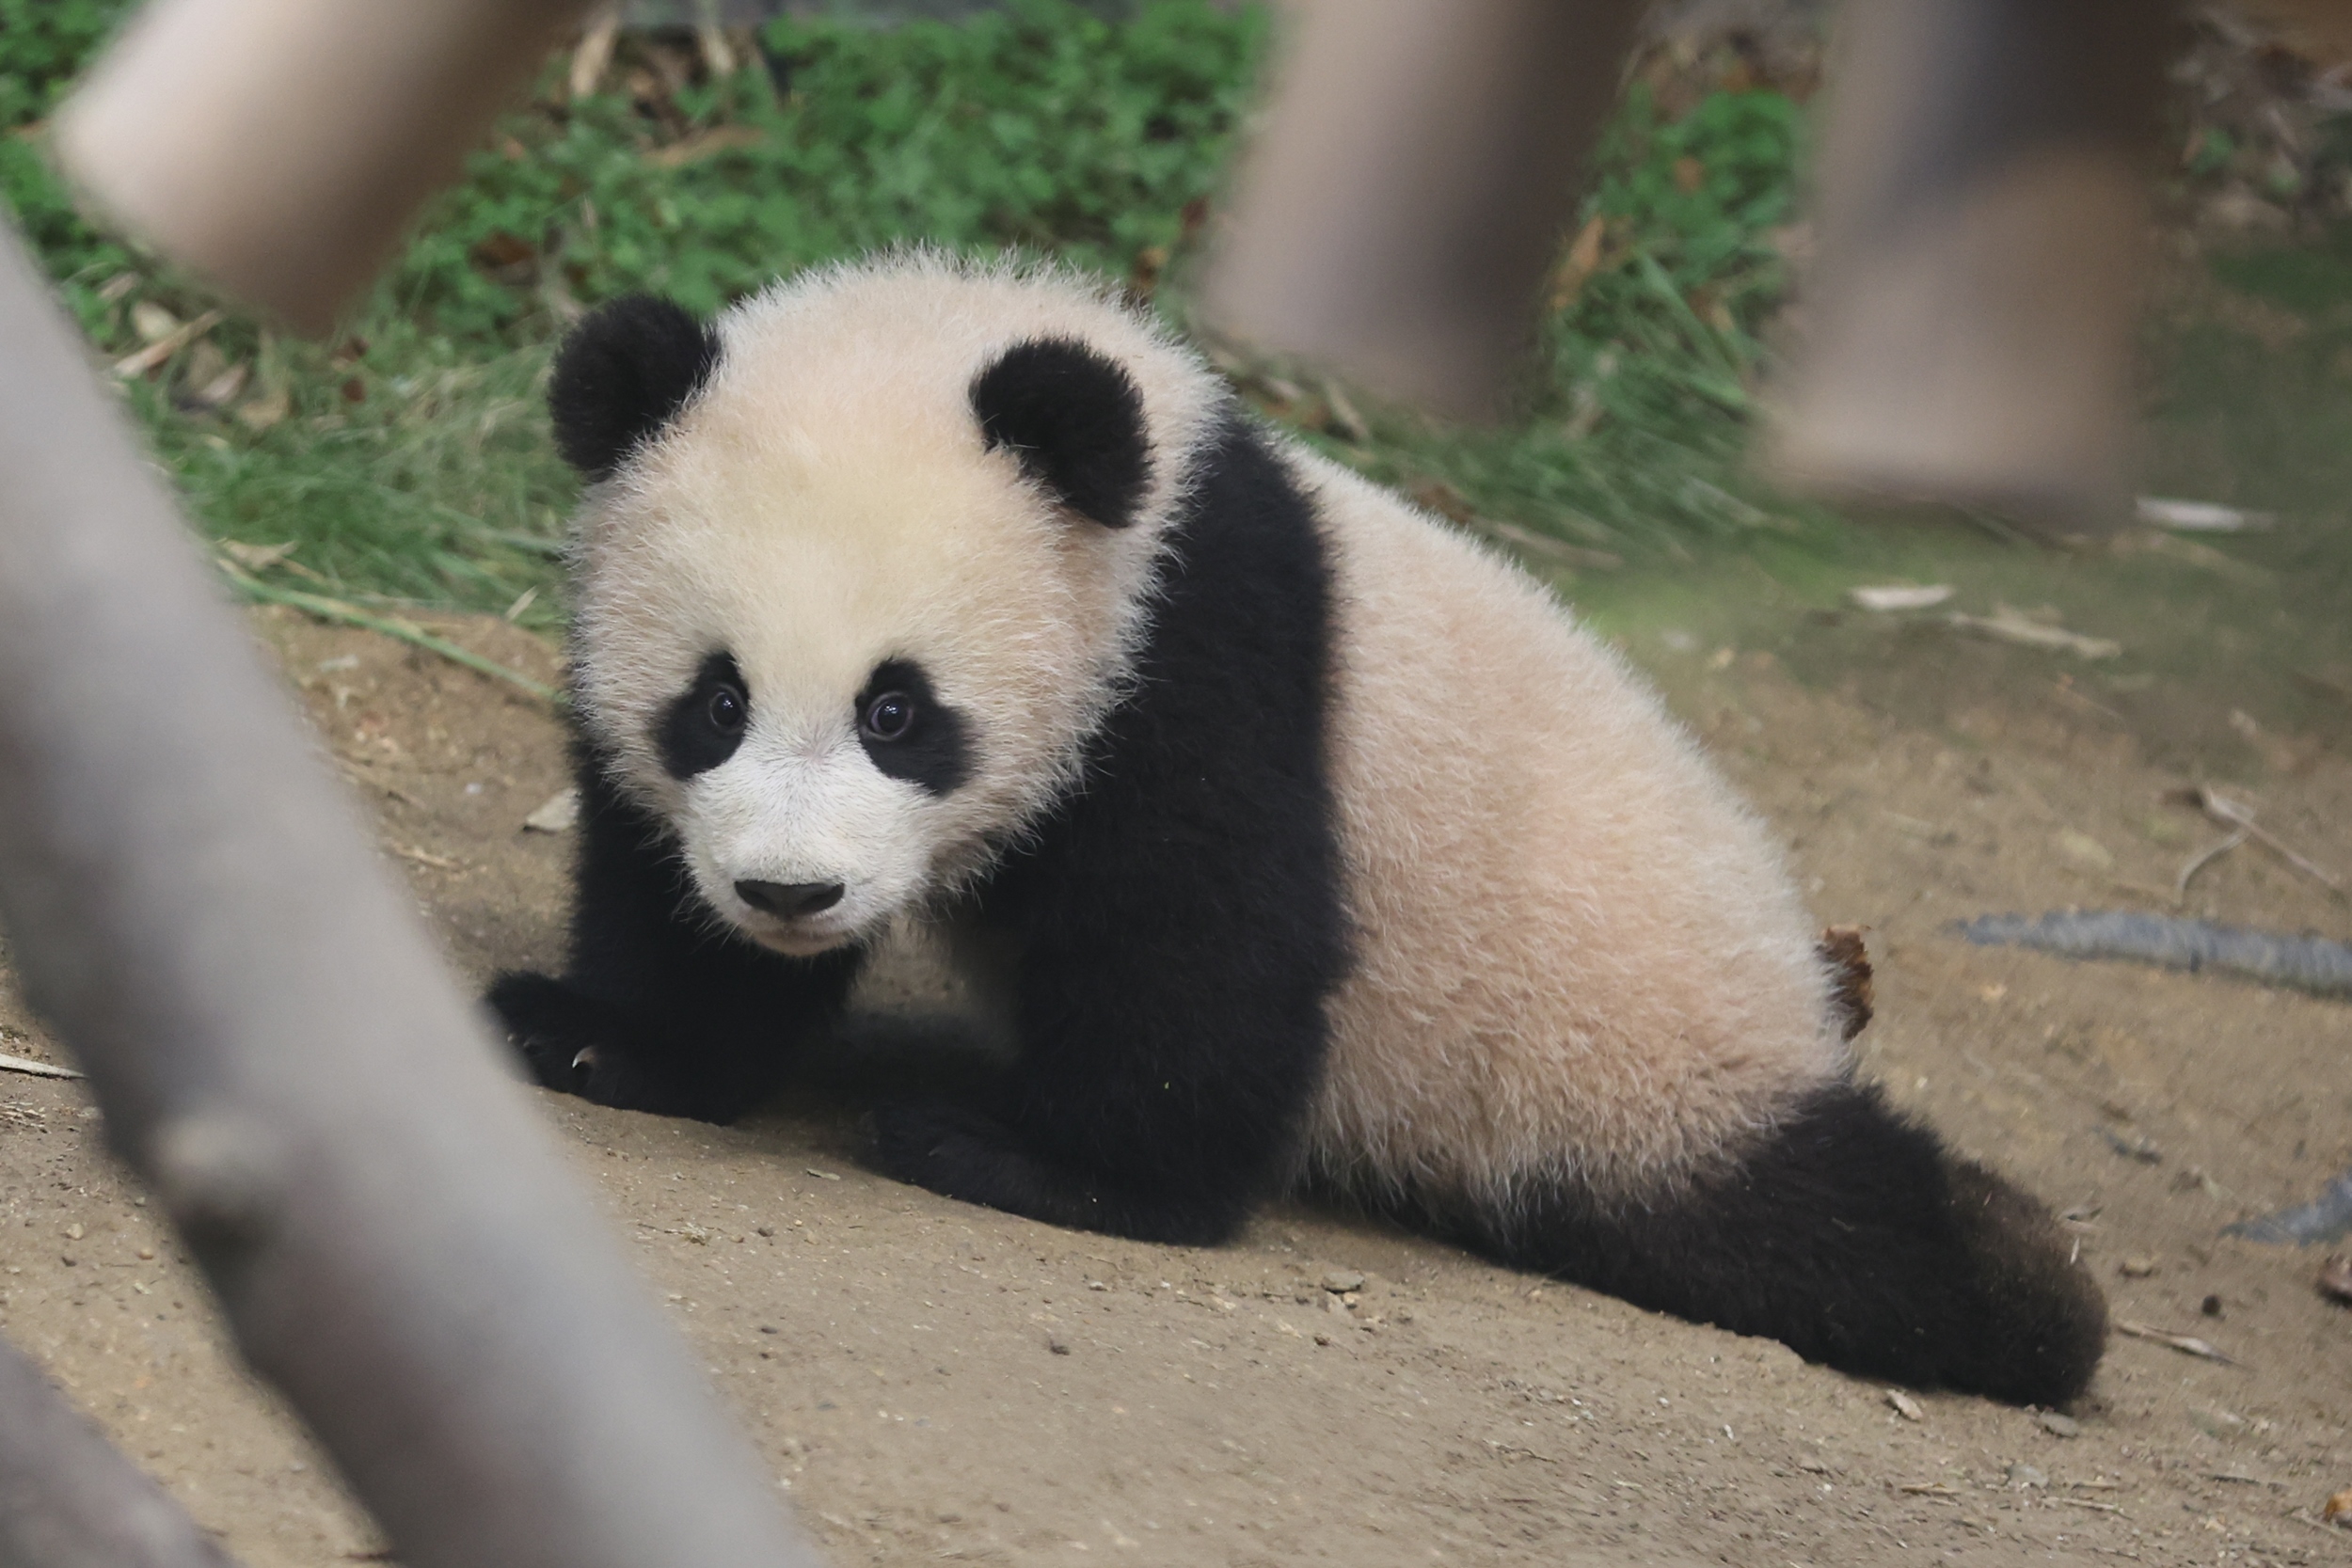 Is this panda doing push-ups?